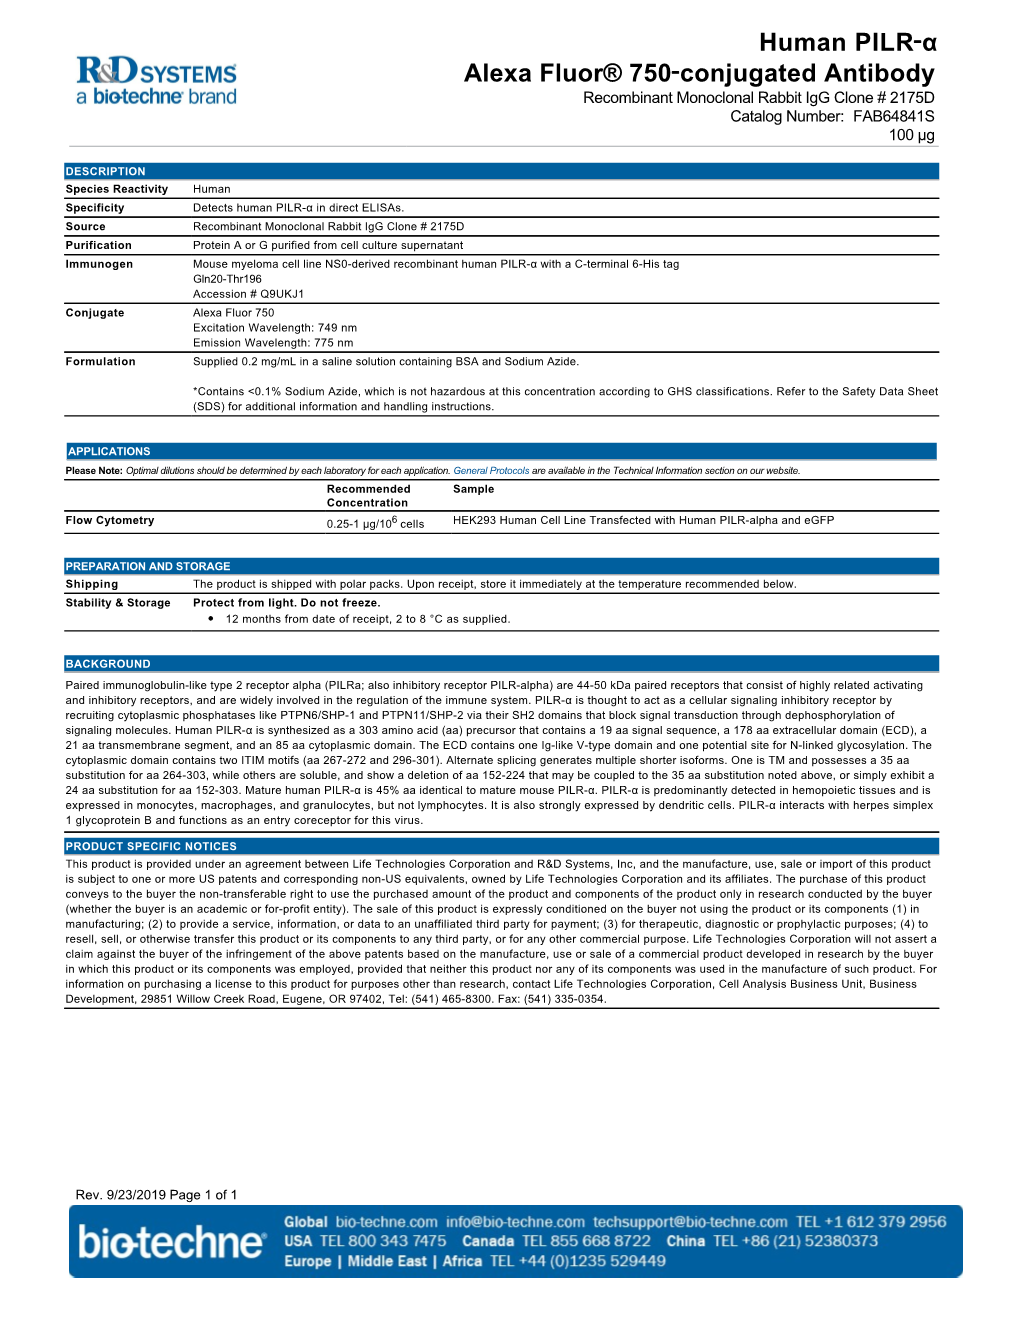 Human PILR‑Α Alexa Fluor® 750‑Conjugated Antibody